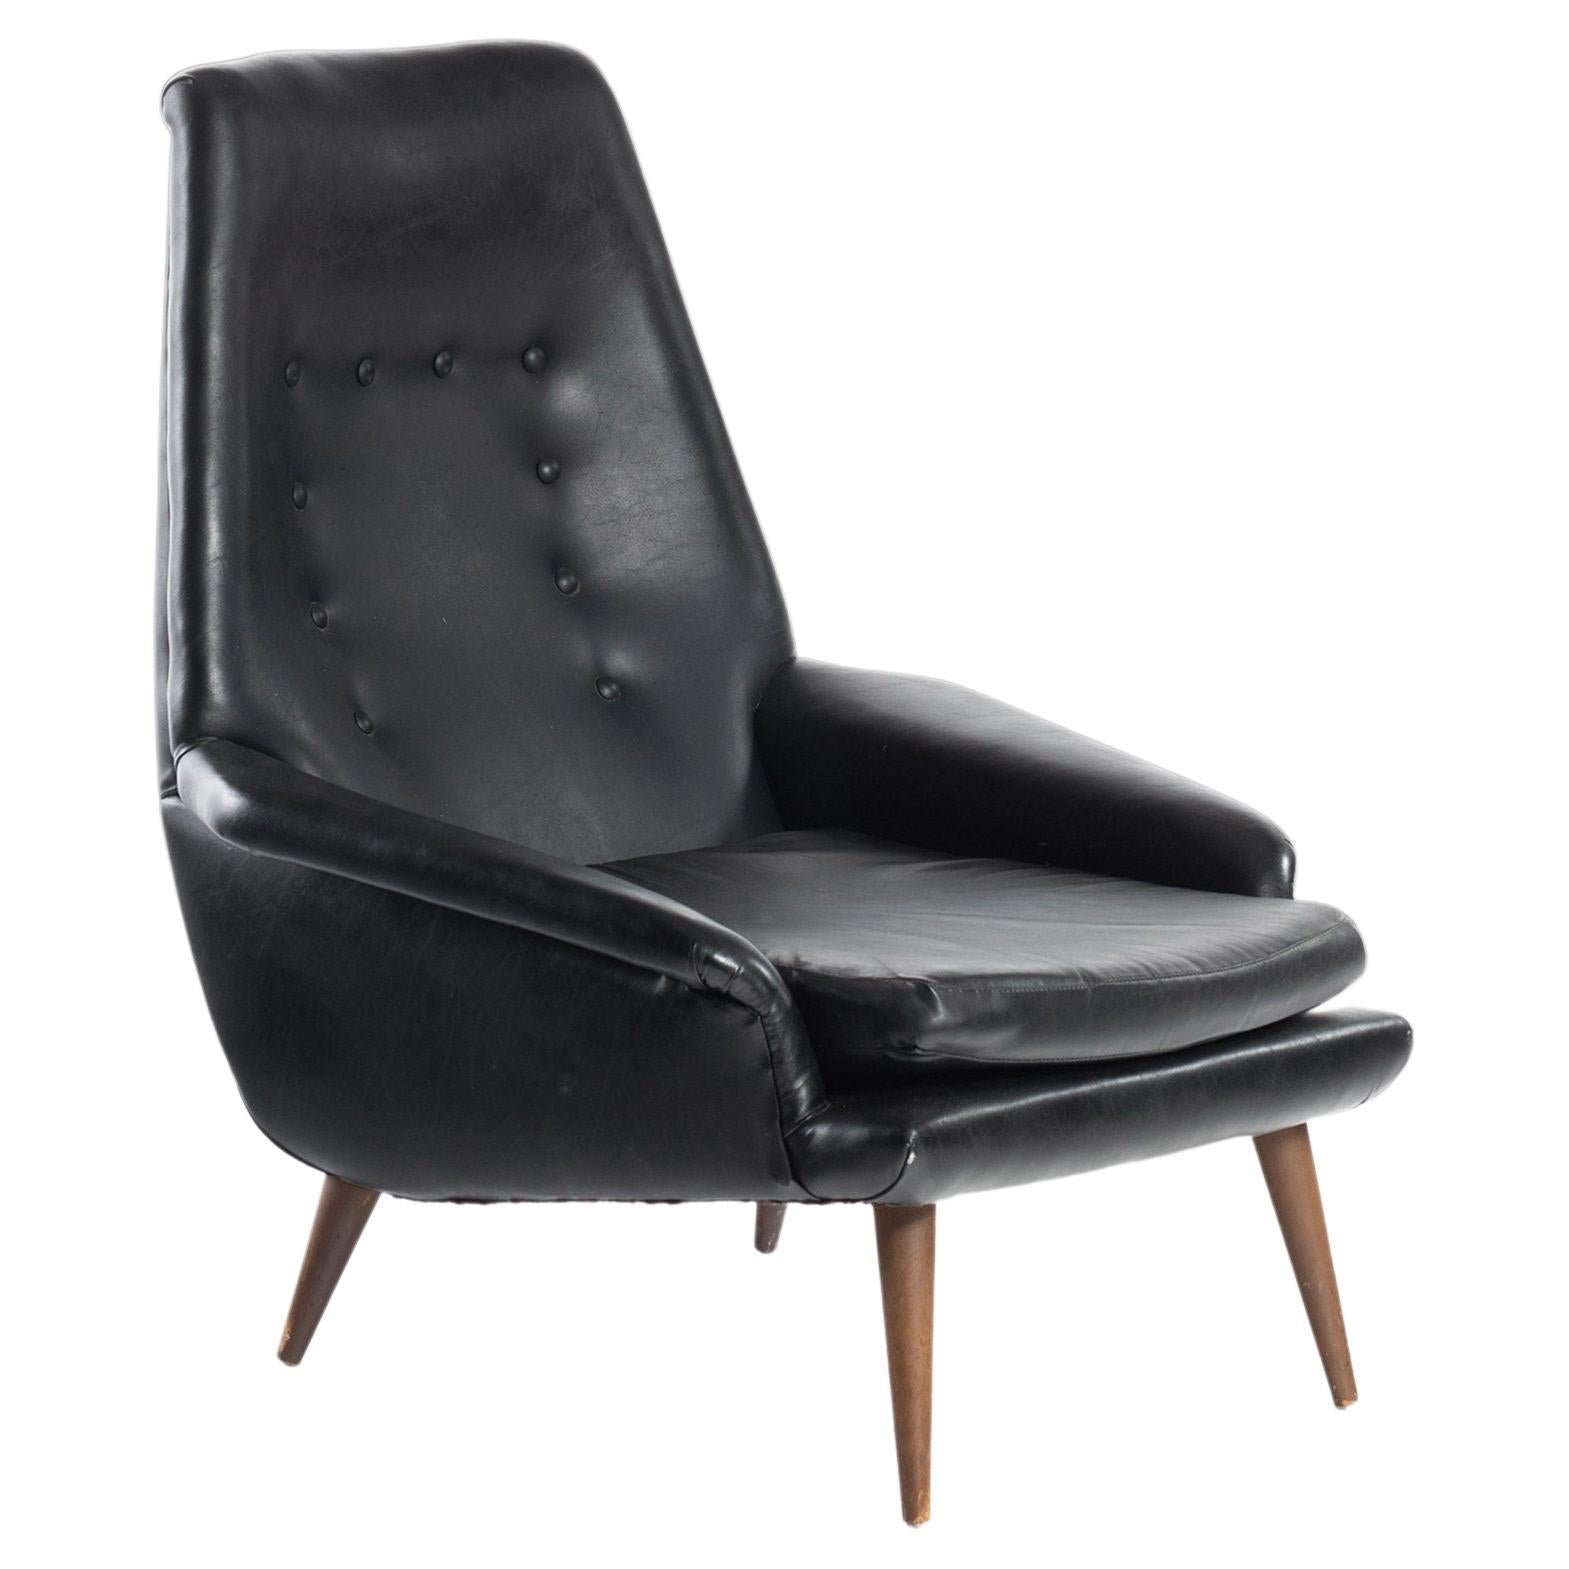 Danish Modern High Back Lounge Chair in Original Vinyl Upholstery, c. 1960s For Sale